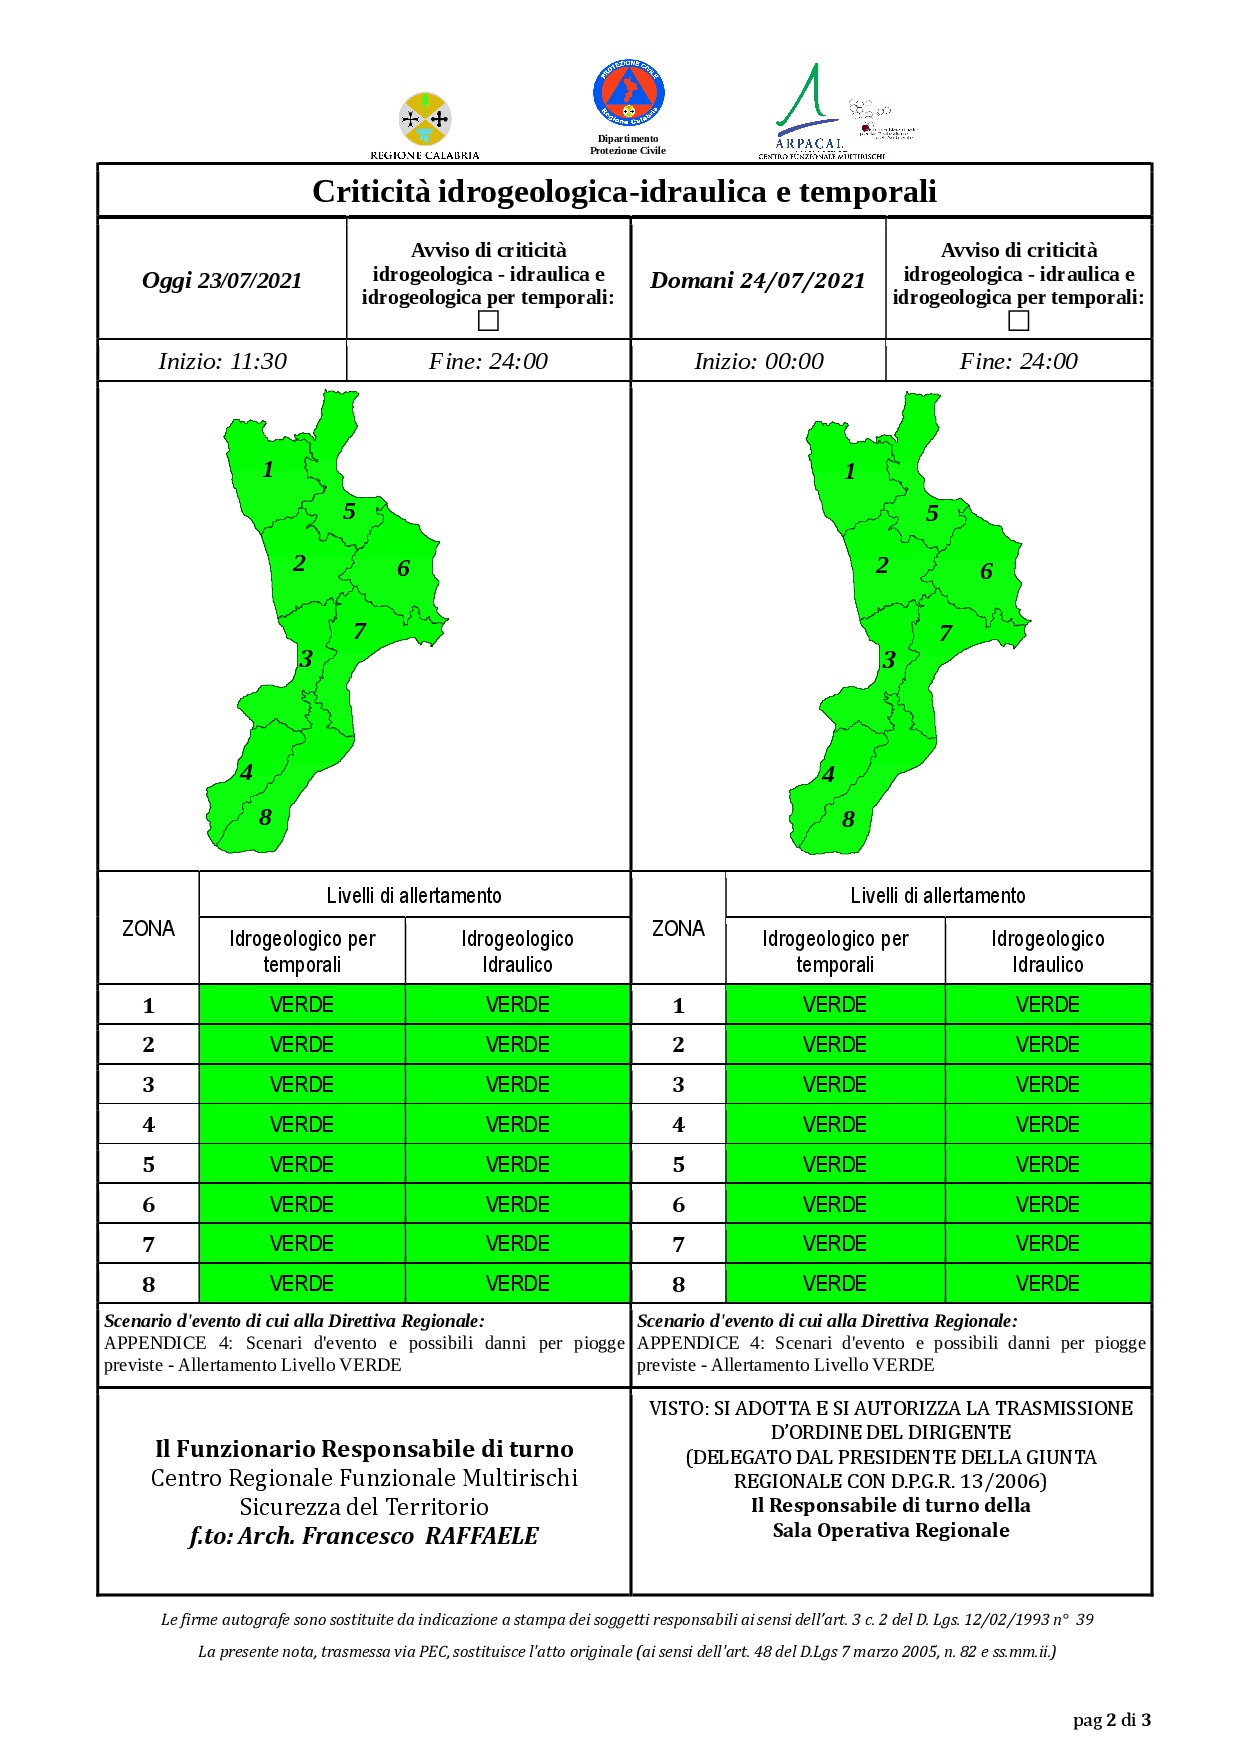 Criticità idrogeologica-idraulica e temporali in Calabria 23-07-2021